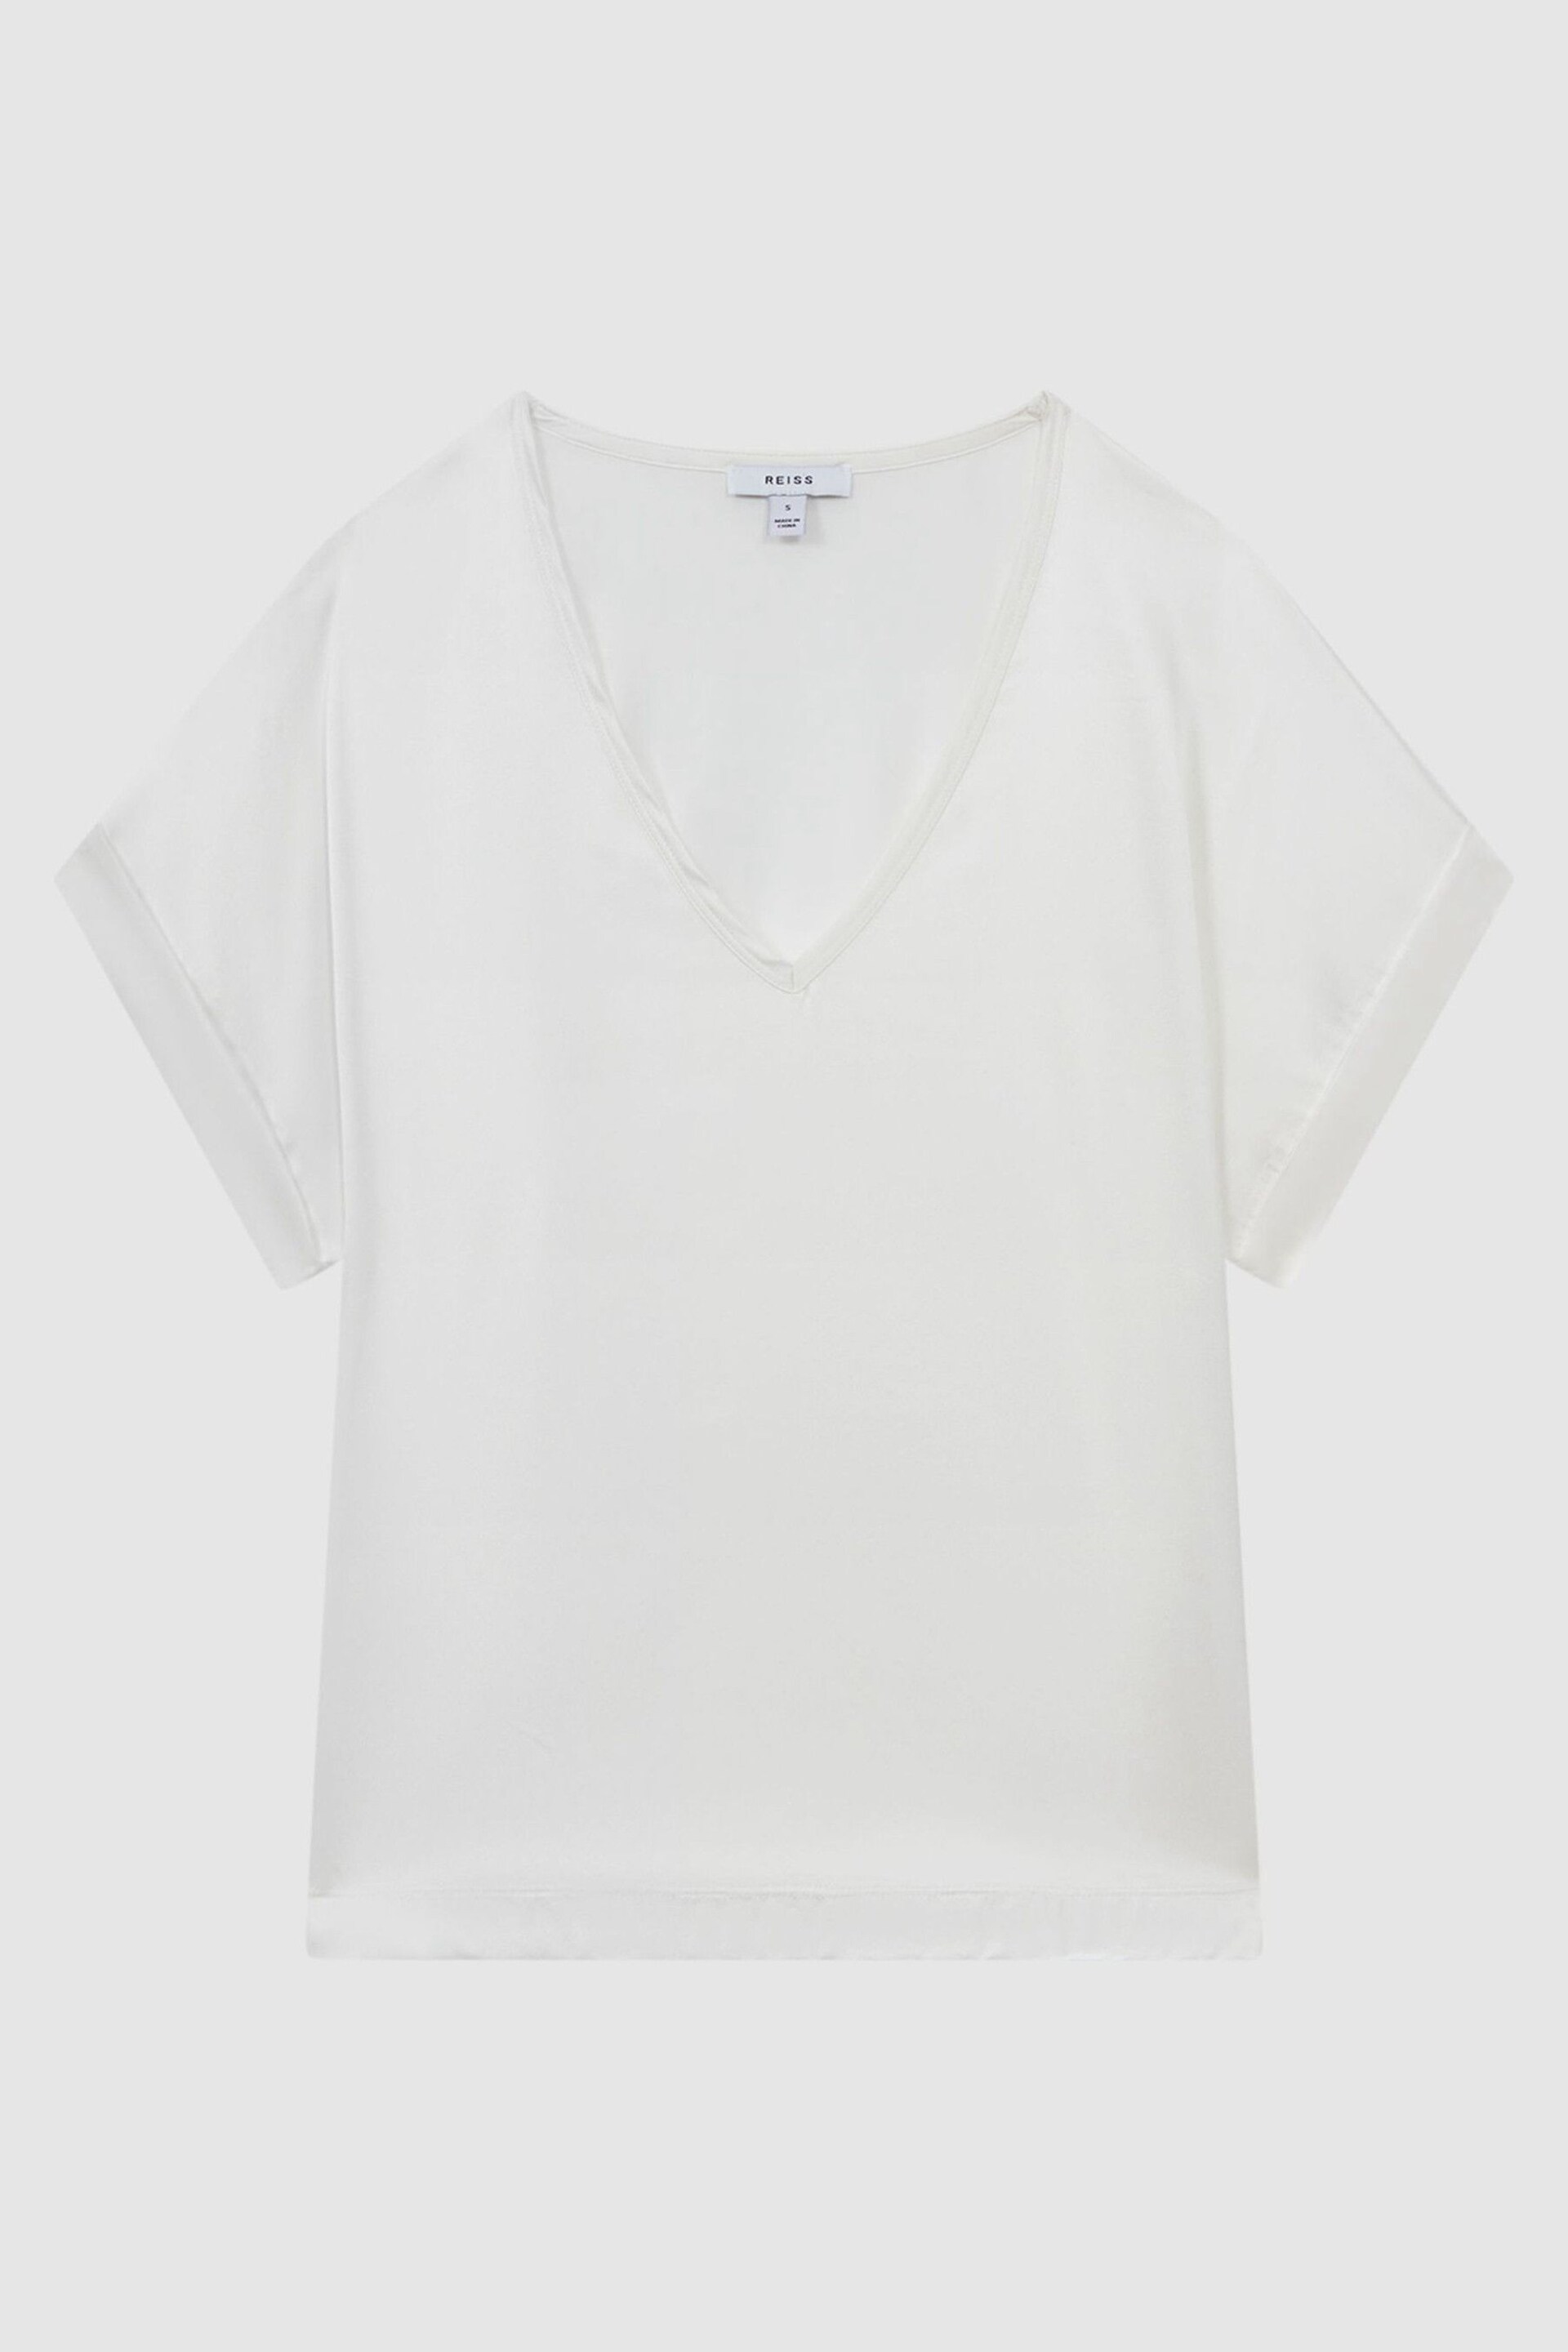 Reiss Ivory Natalia Silk-Front V-Neck T-Shirt - Image 2 of 5